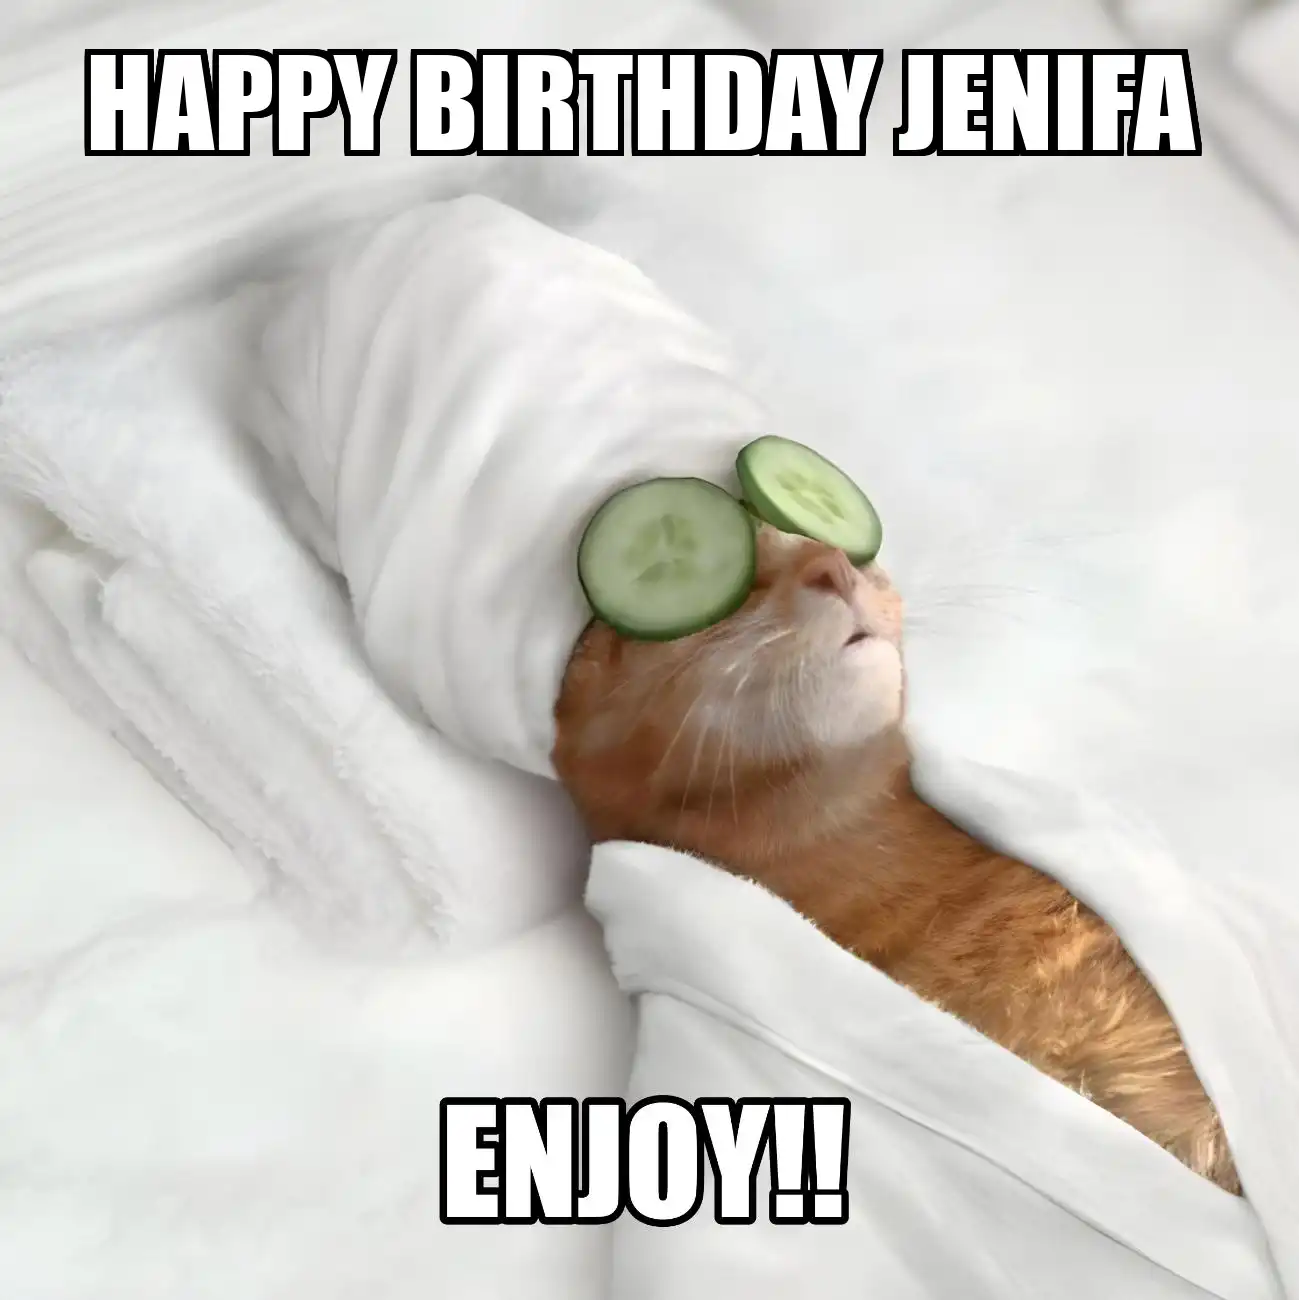 Happy Birthday Jenifa Enjoy Cat Meme